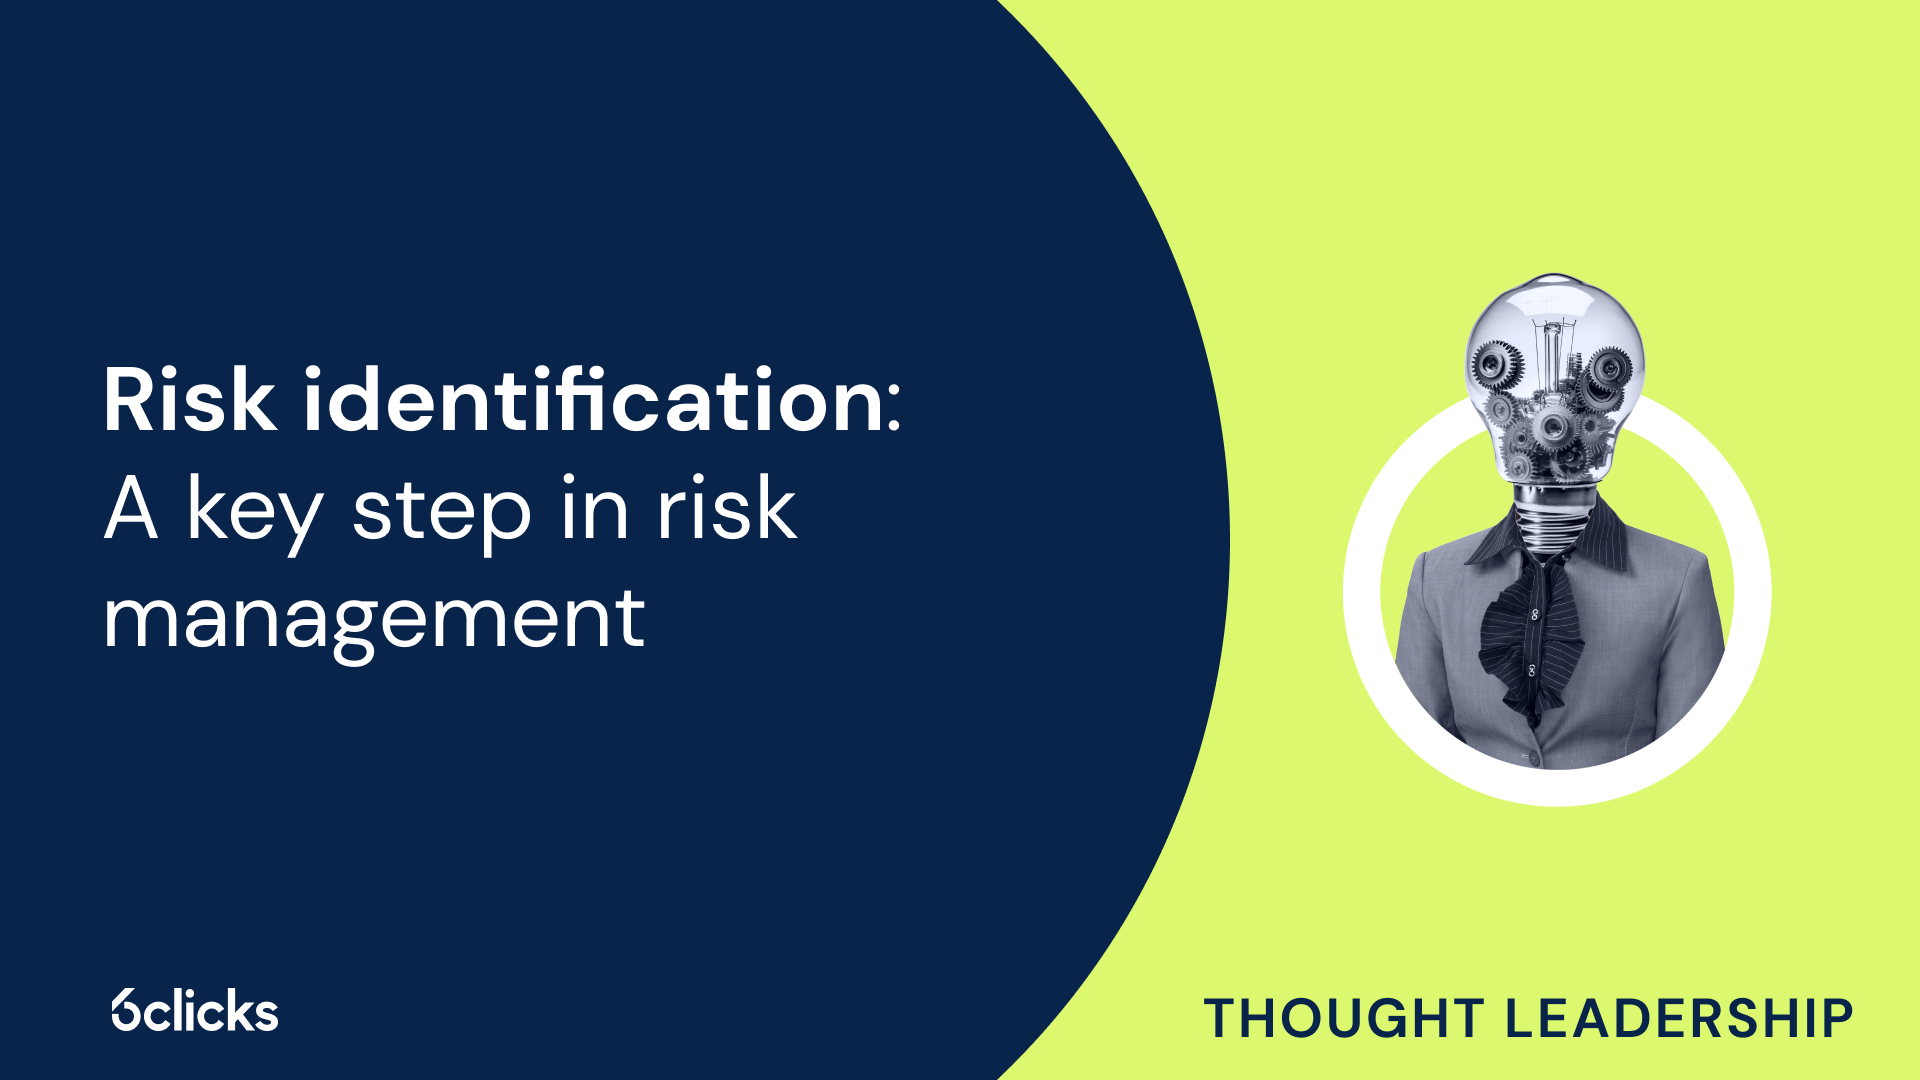 Risk identification: A key step in risk management